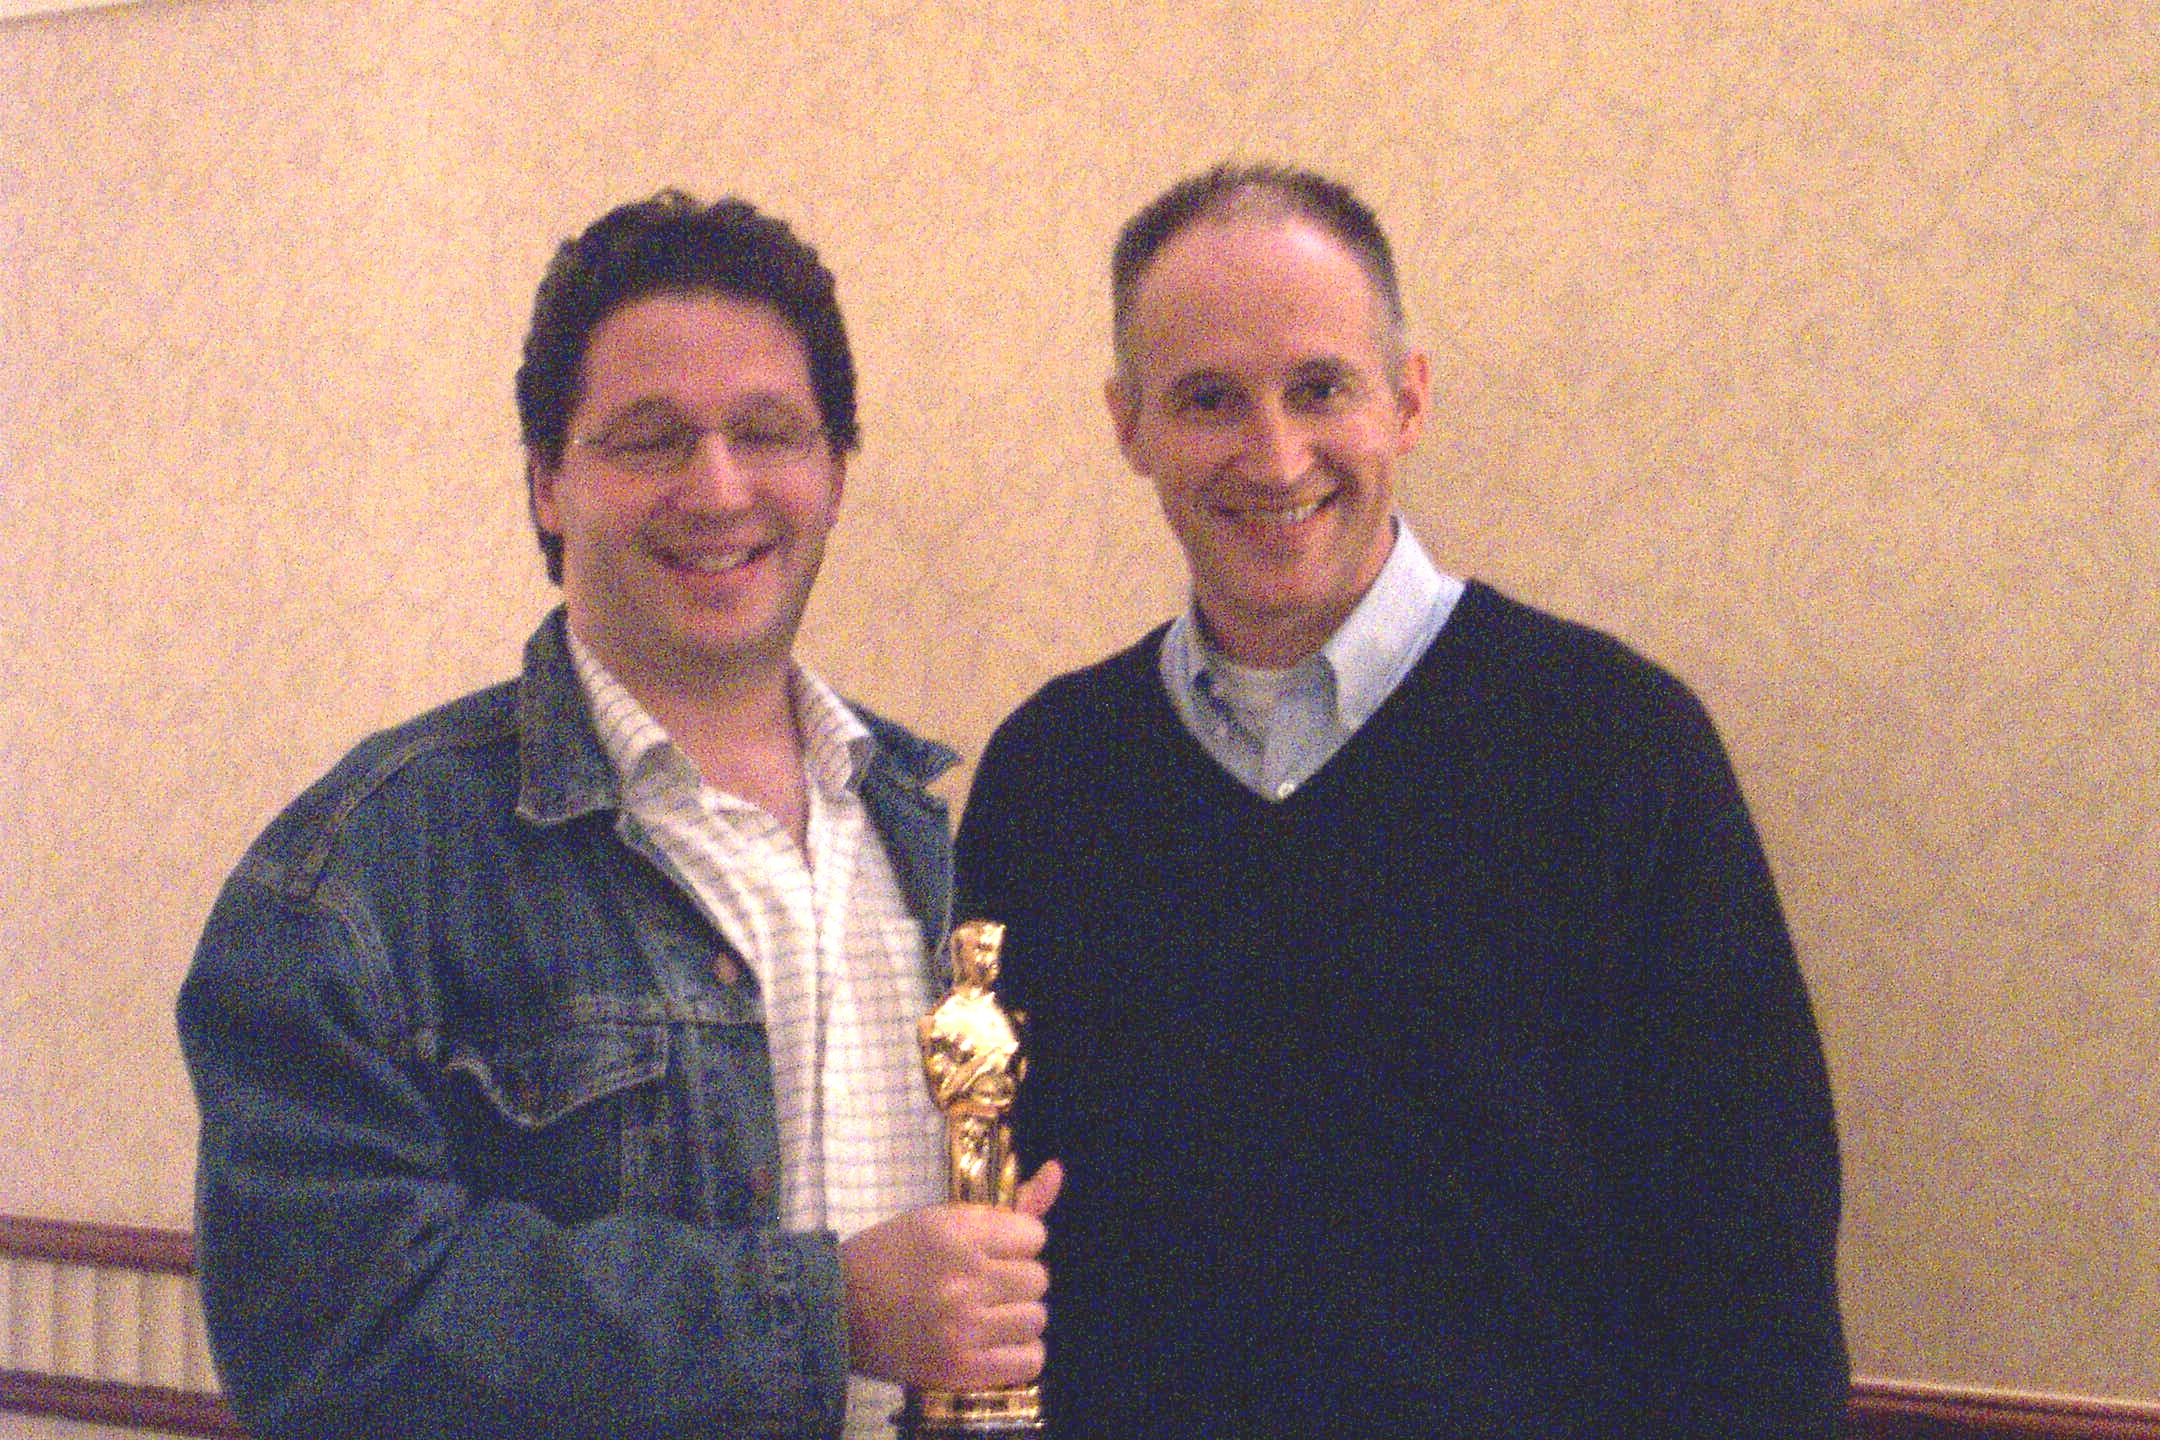 Michael Saouli and Michael Donovan with Bowling for Columbine Oscar.